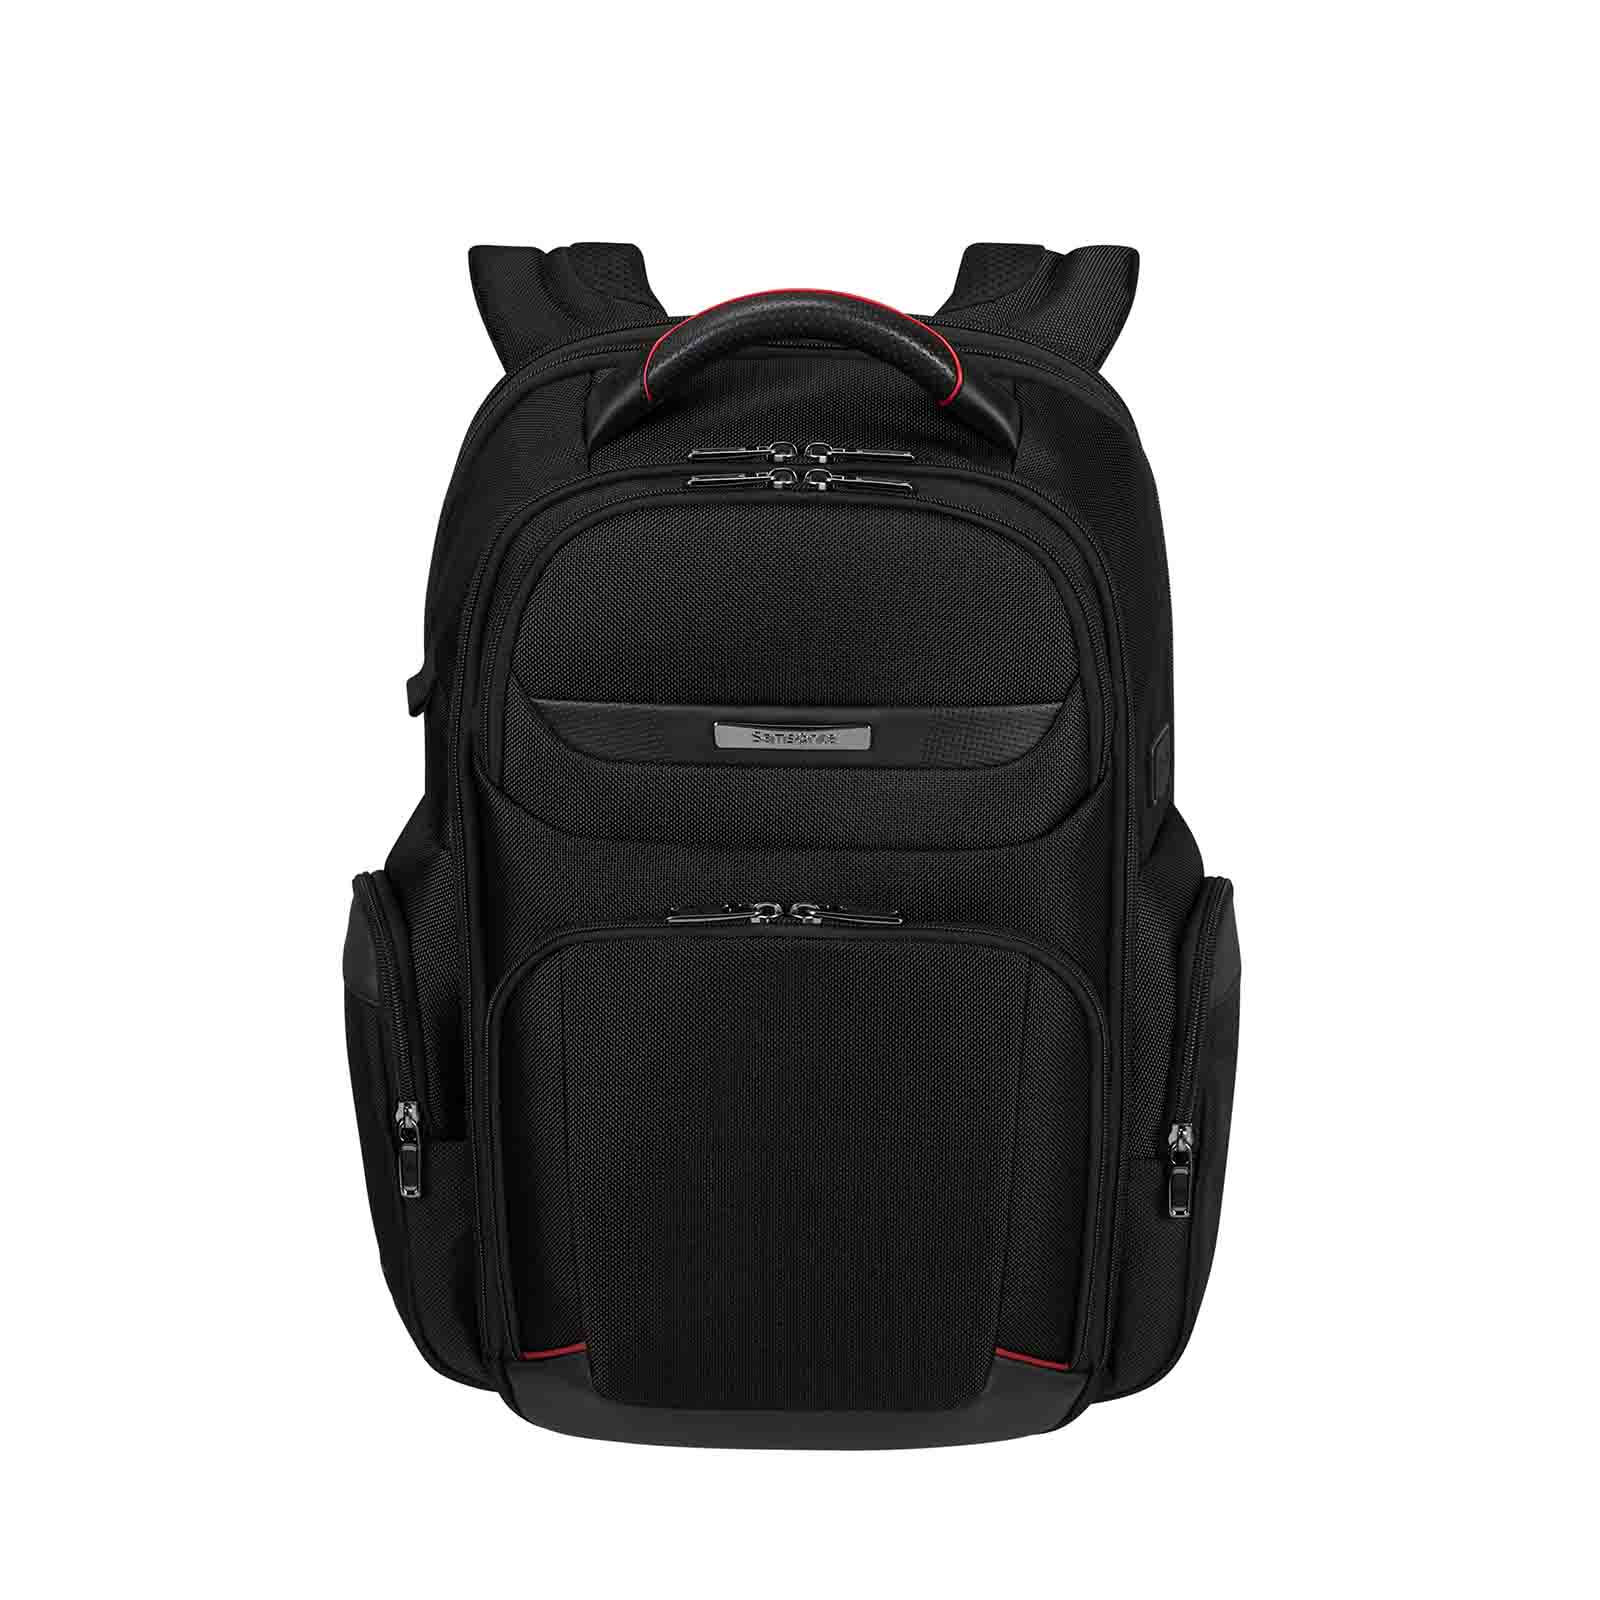 Samsonite-Pro-Dlx-6-Laptop-Backpack-15-Inch-Front